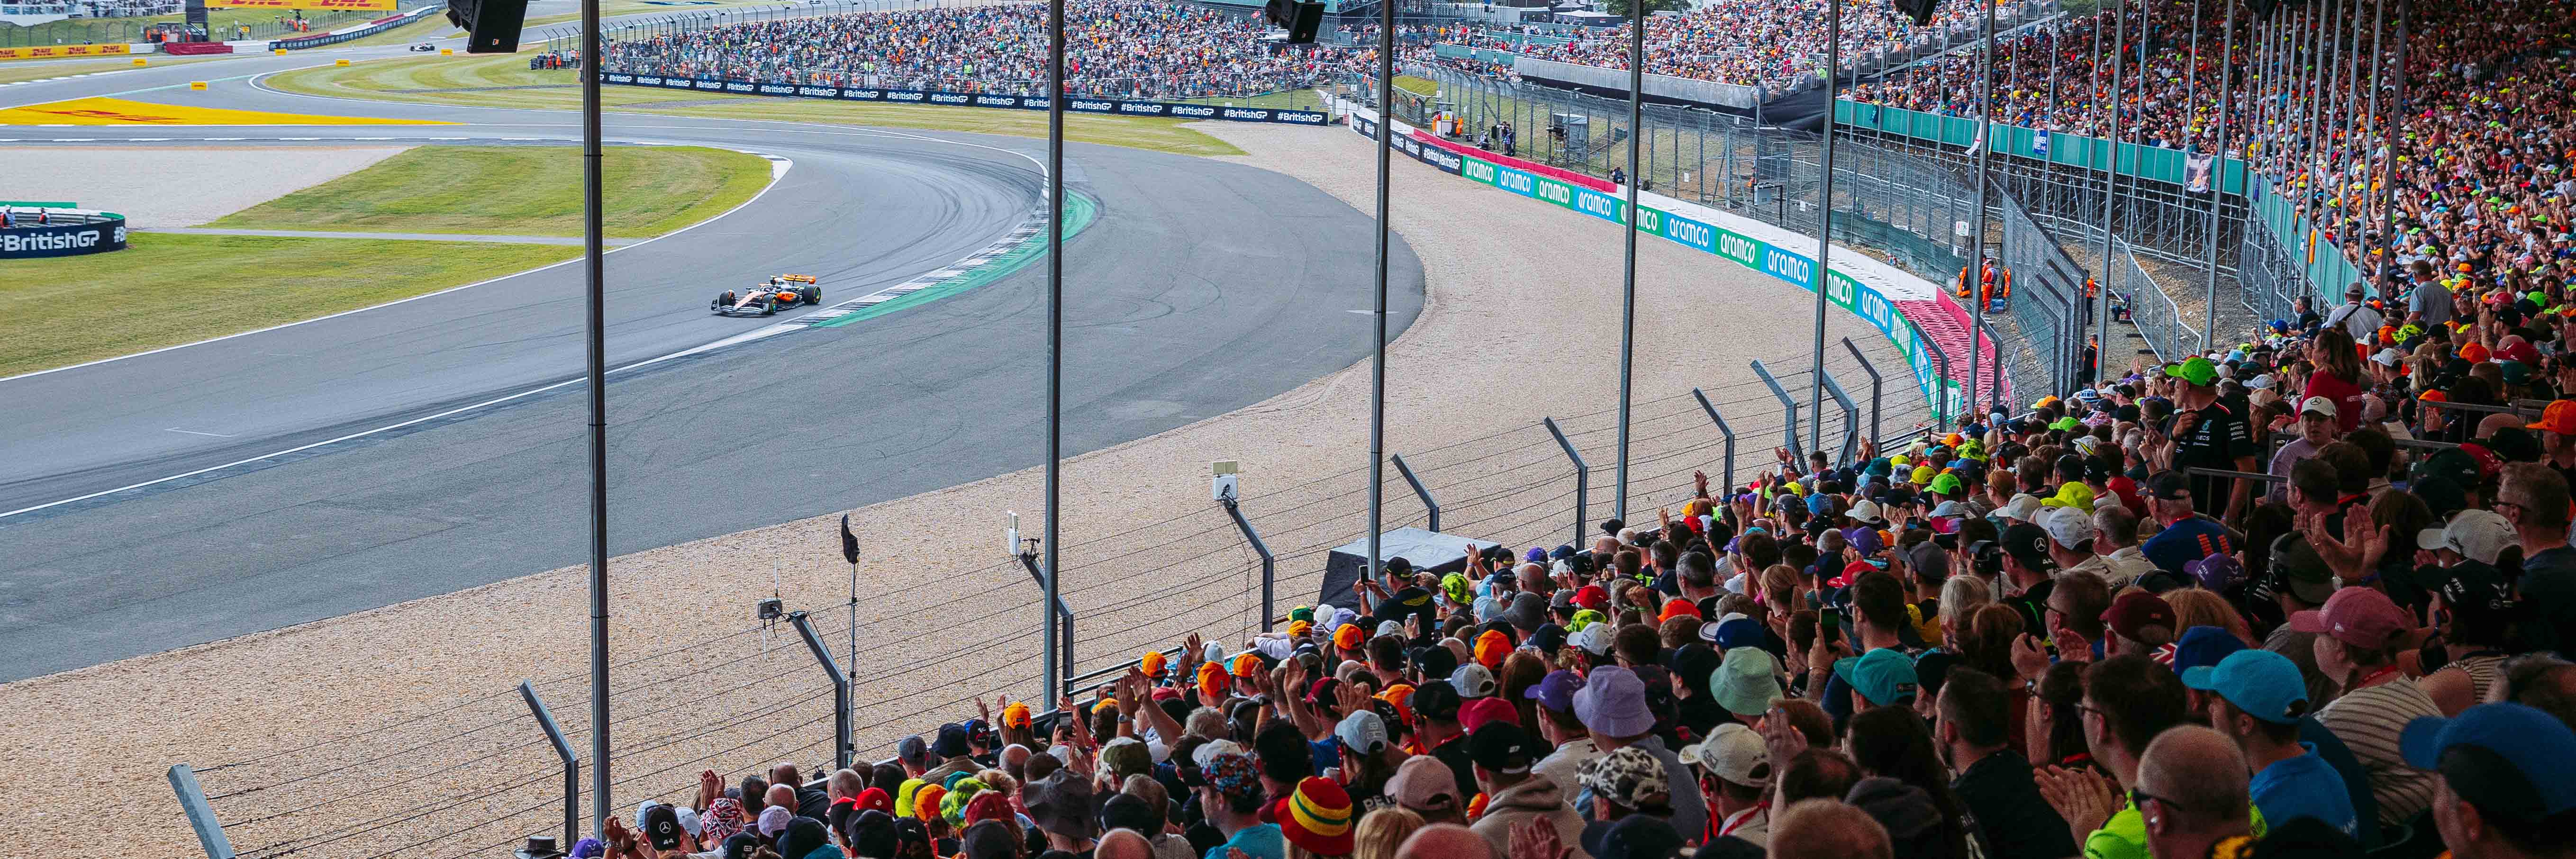 Club corner at the British Grand Prix